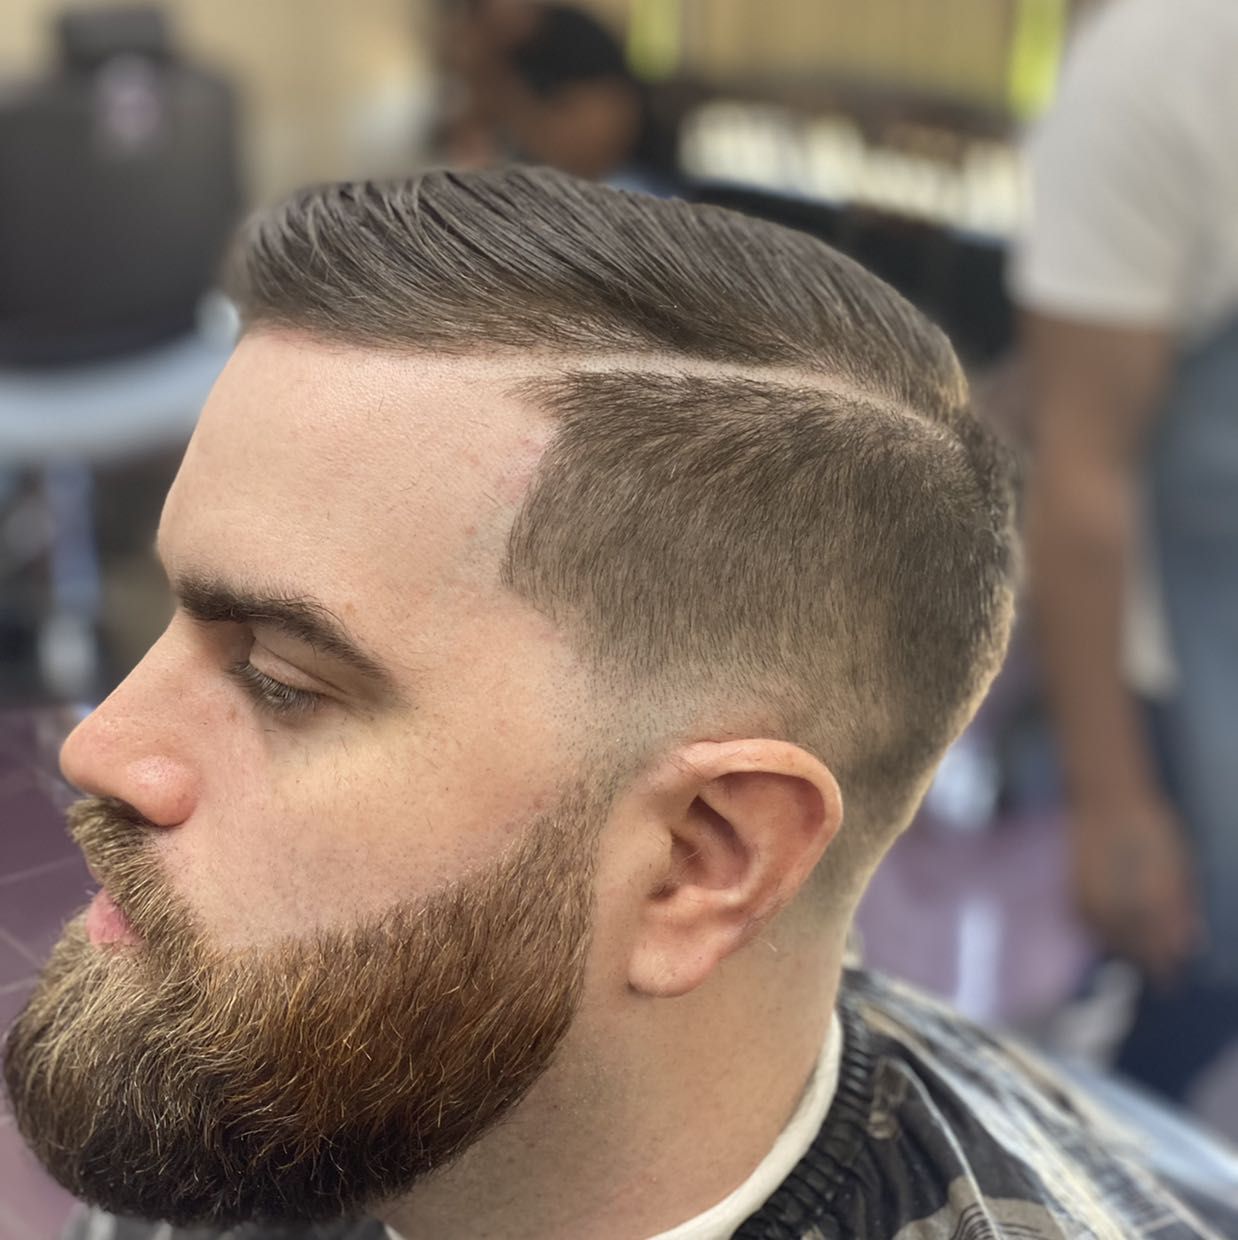 Shear cut(straight hair)with fade and beard portfolio